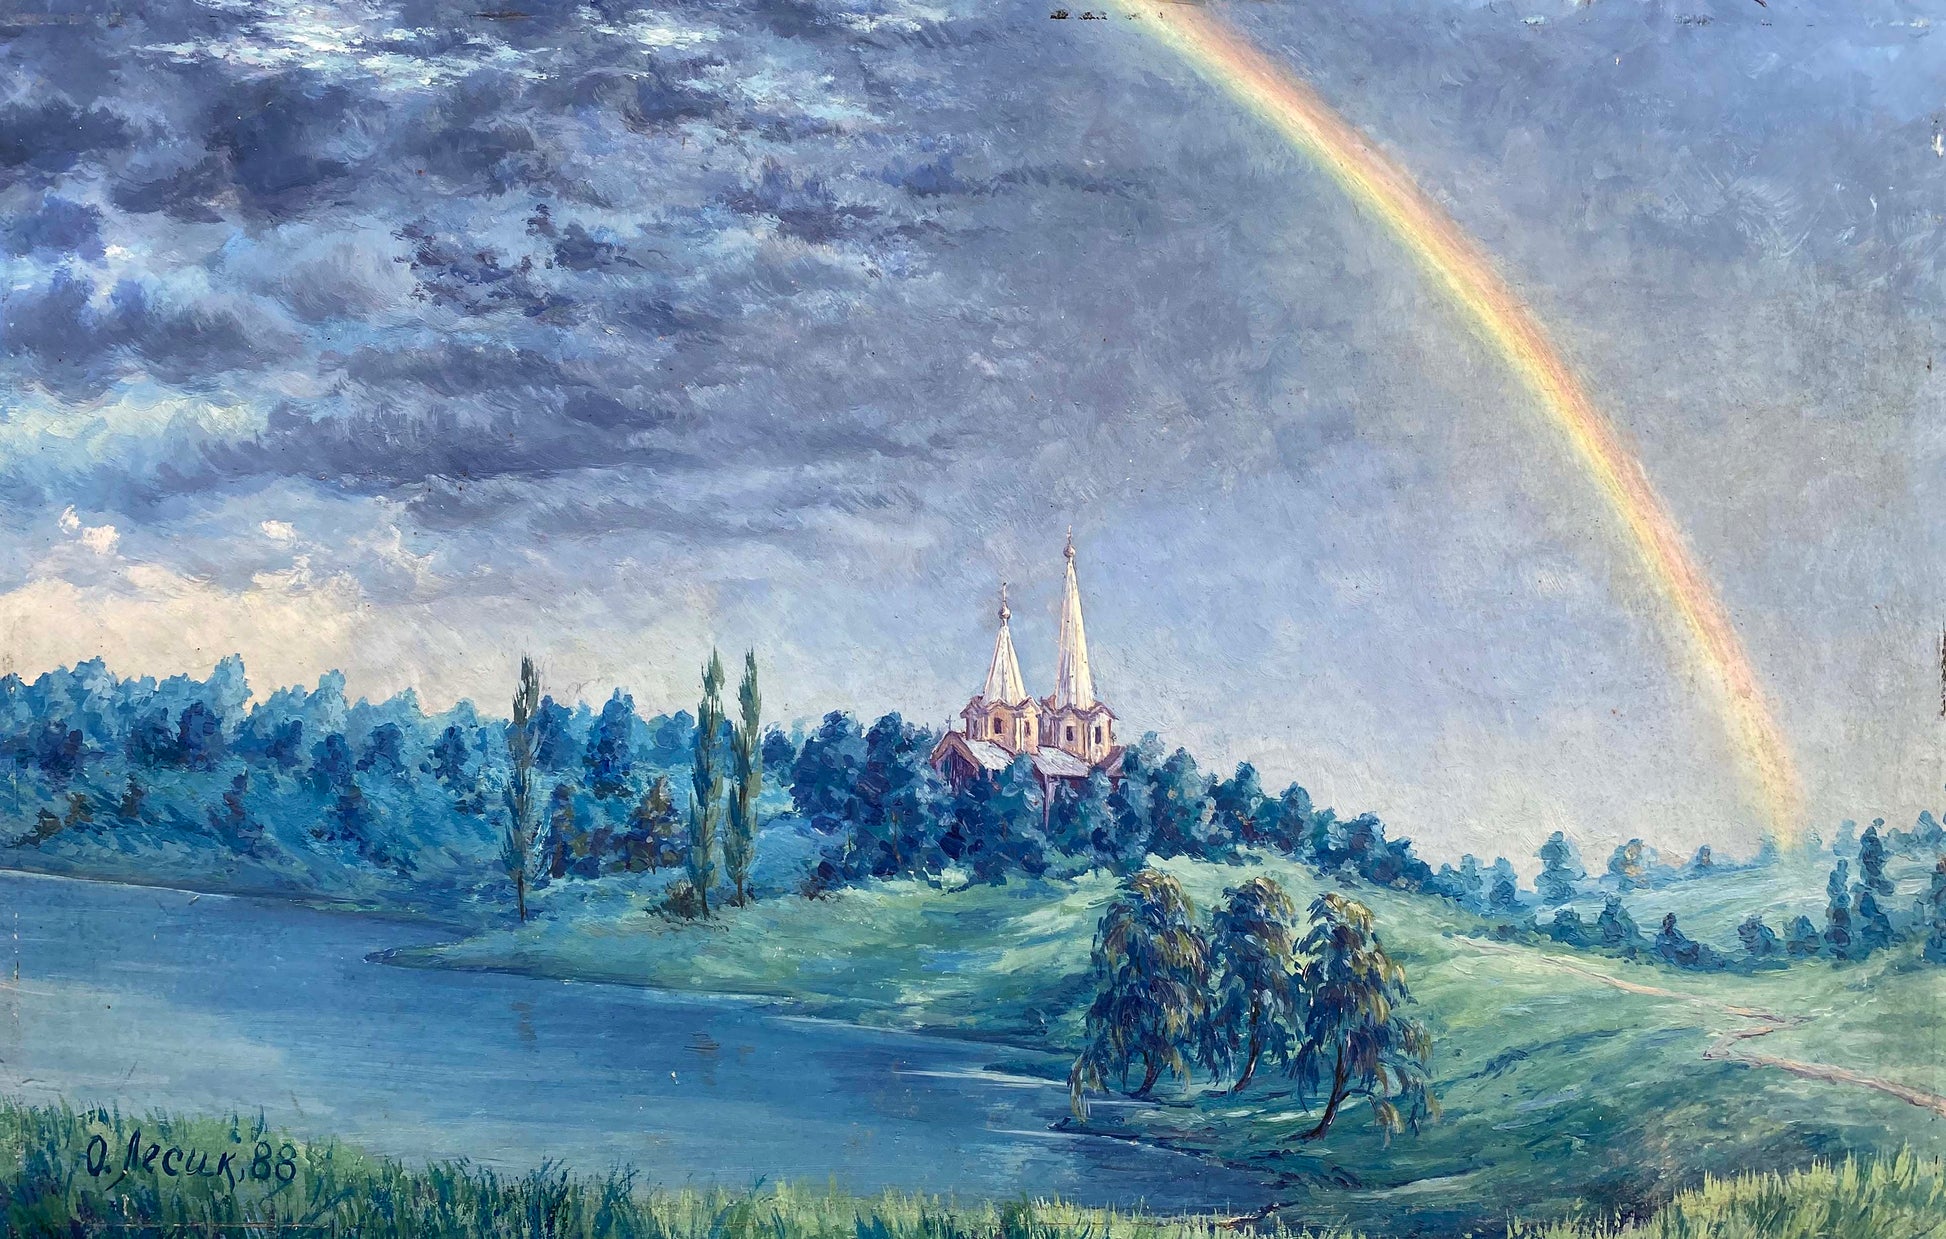 Alexander Vladimirovich Lesik's oil painting depicting a rainbow over the church